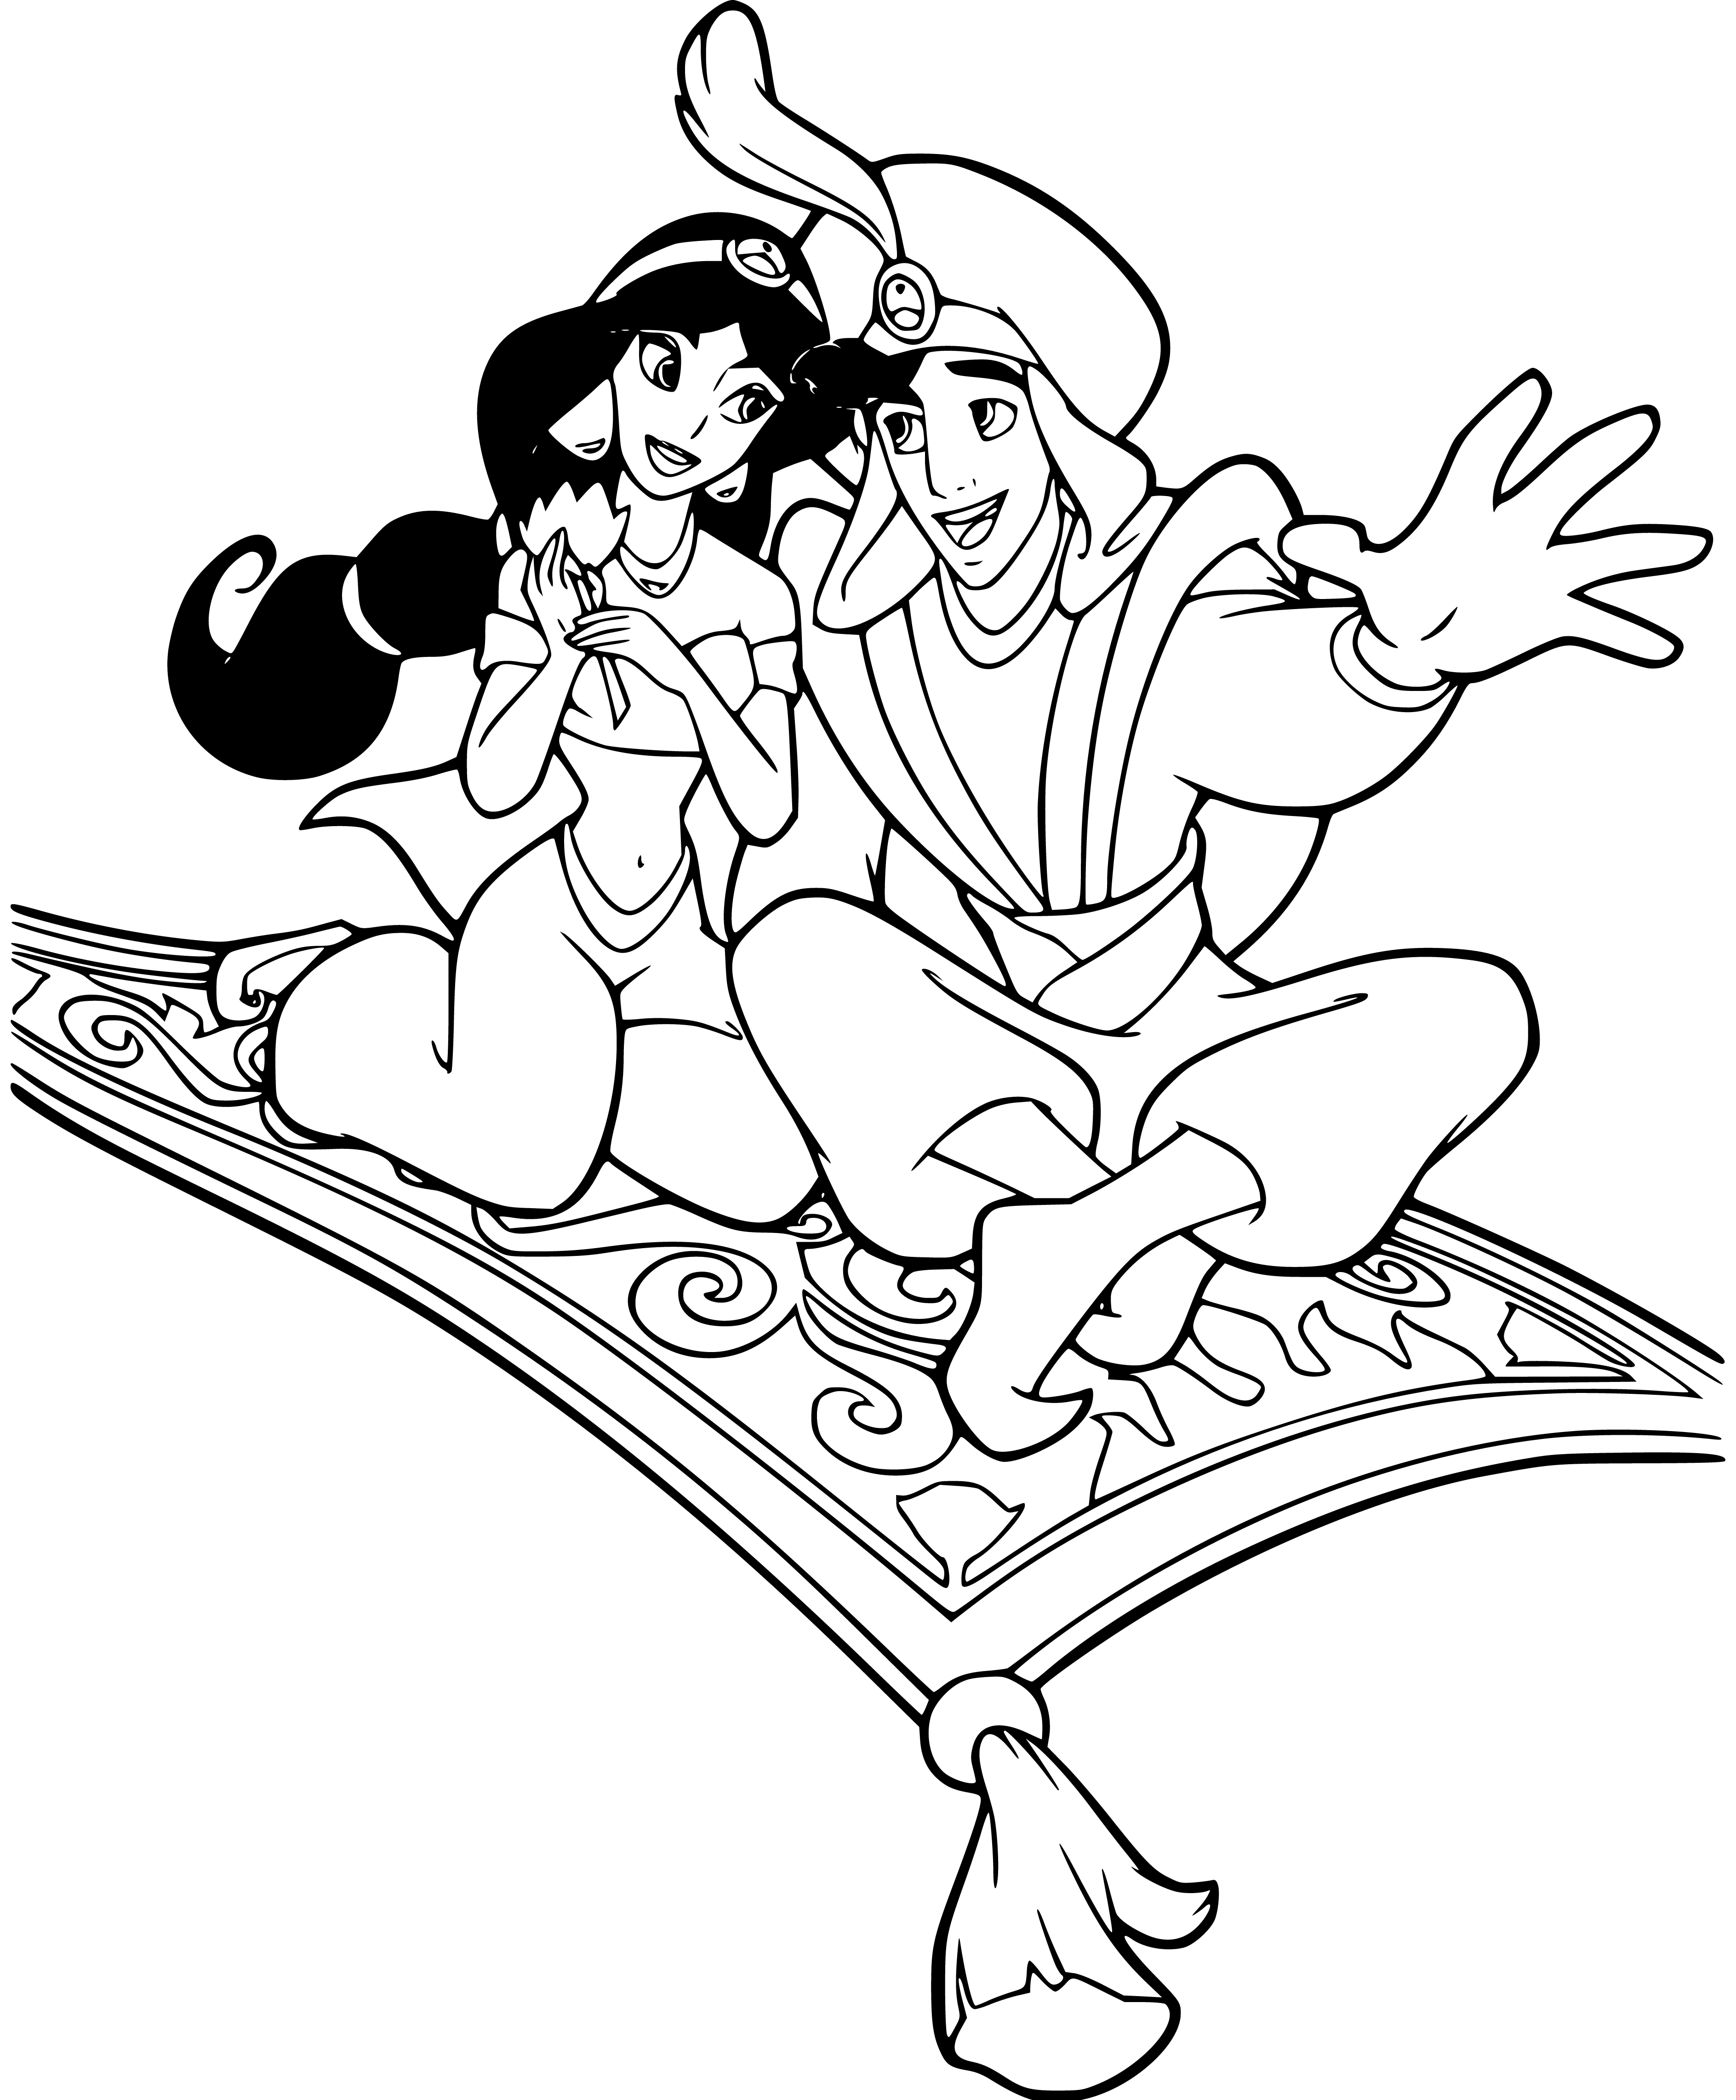 Aladdin and Jasmine flying carpet Coloring Page - SheetalColor.com